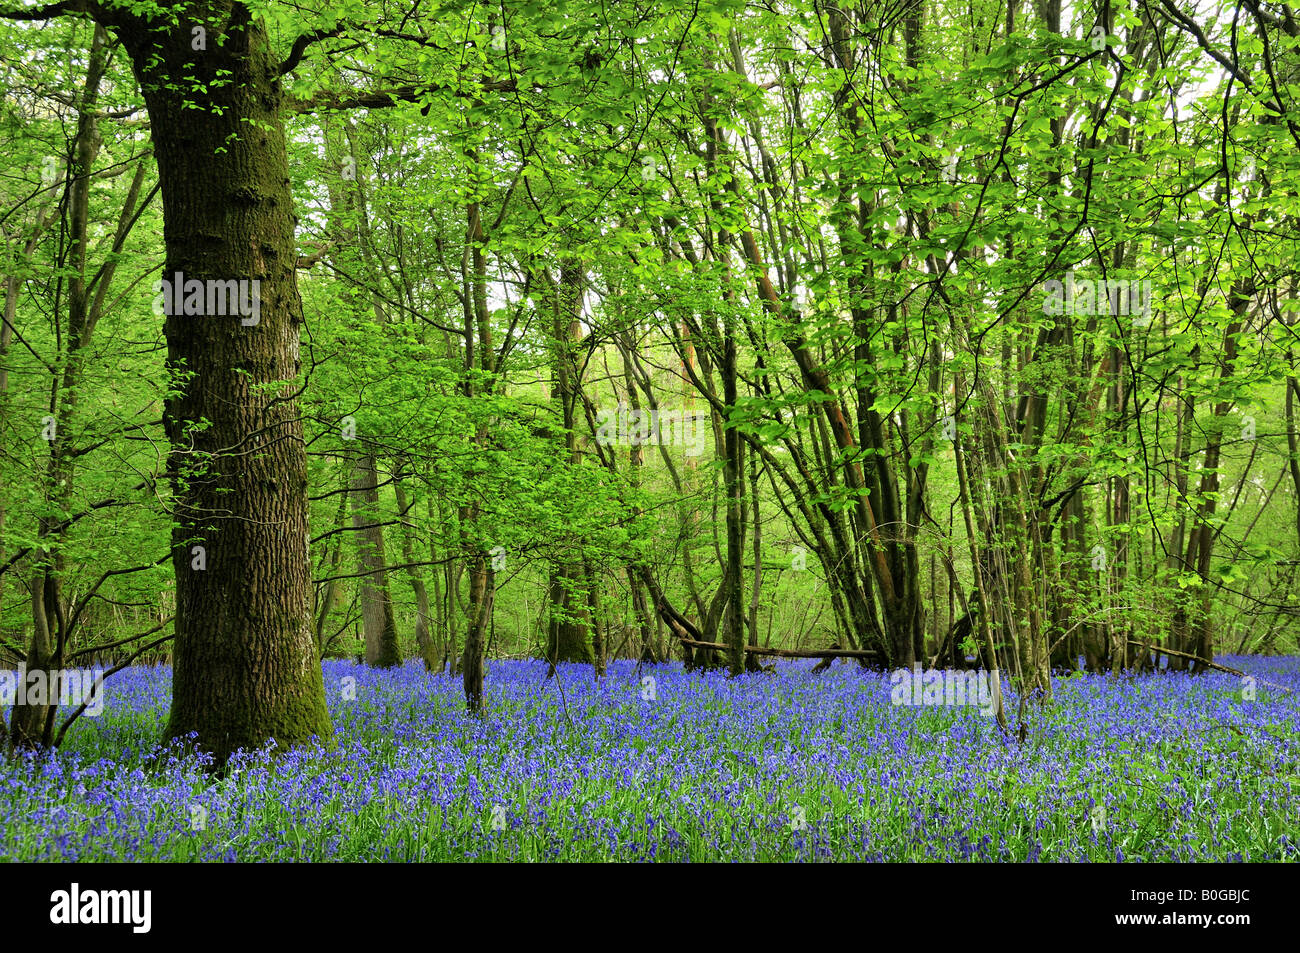 Bluebell wood, East Sussex, UK Banque D'Images